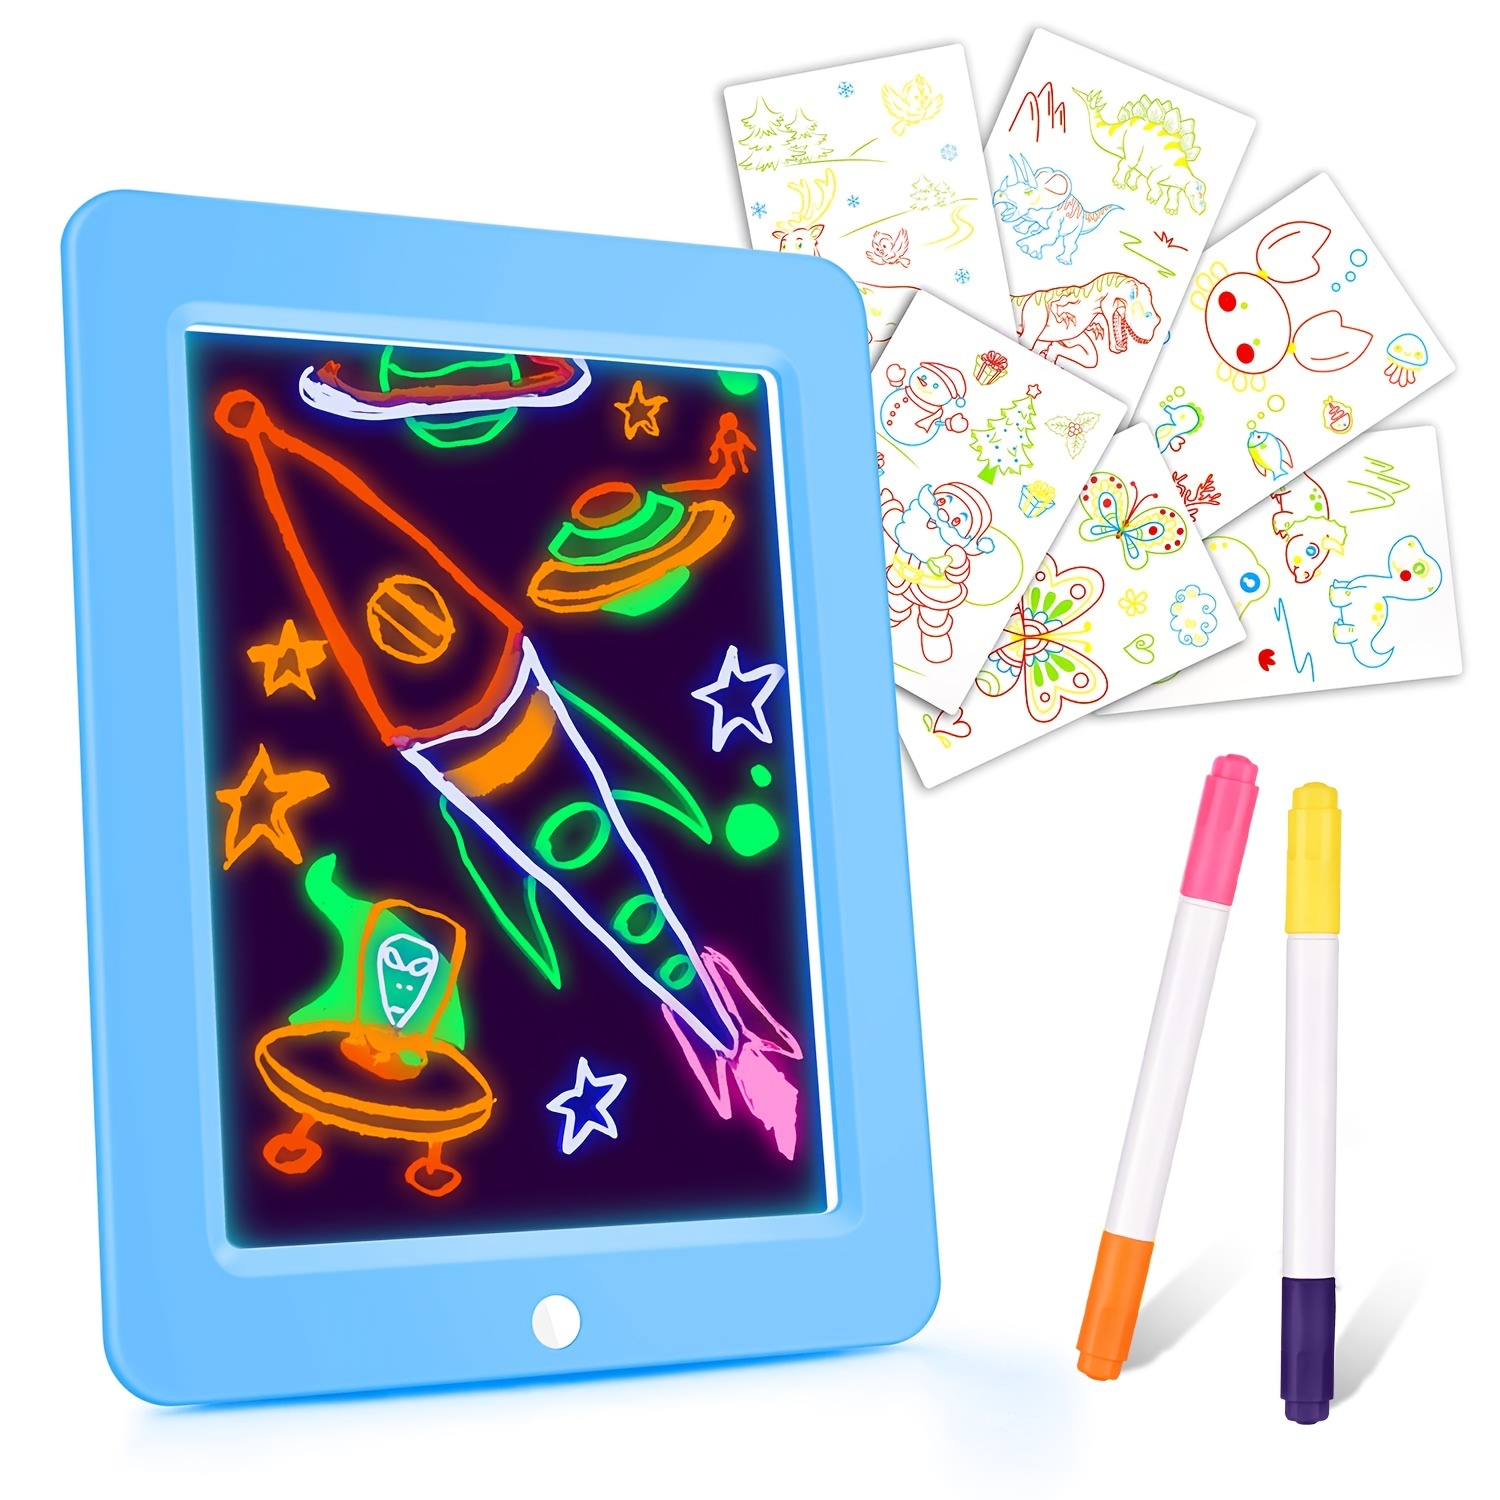 Magic 3D Drawing Board ,Art Drawing Teaching Tool Educational Toys, LED  Lights Glowing Art Drawing Teaching Tool,Children's Writing Board 